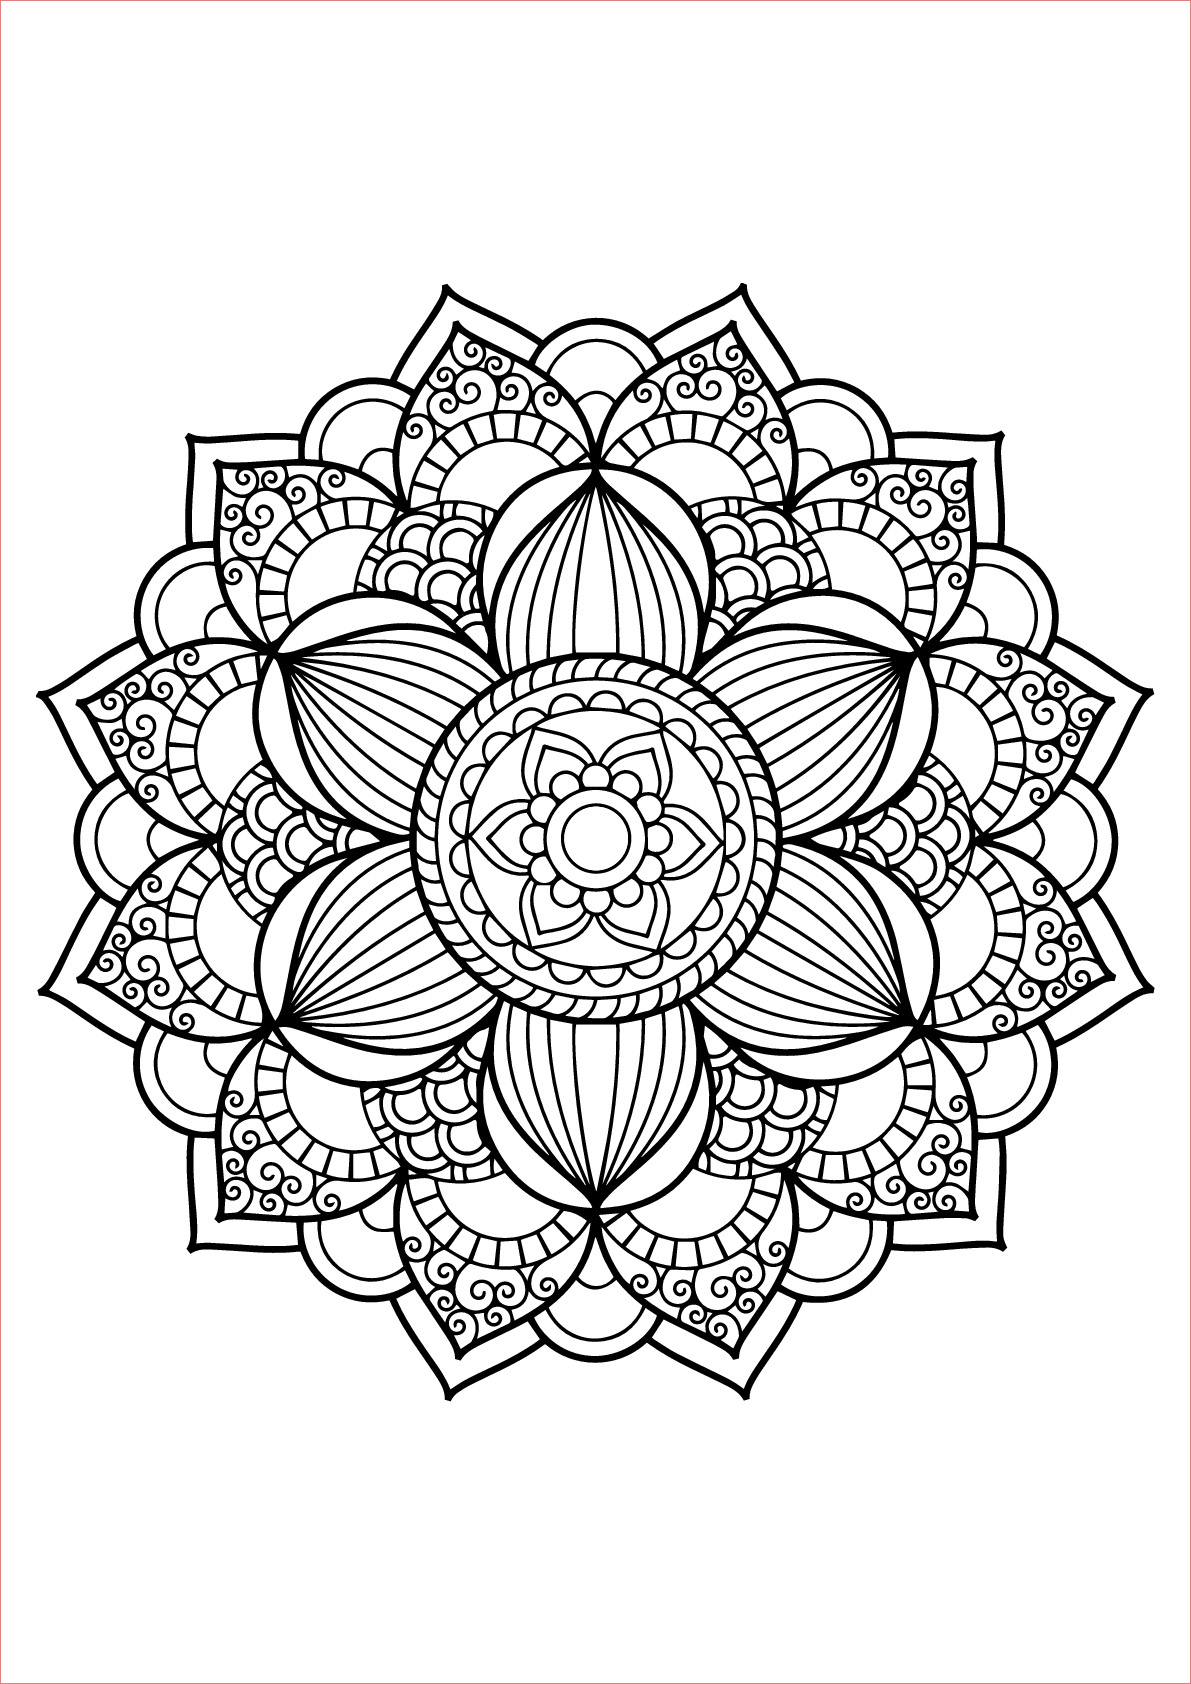 image=mandalas mandala from free coloring book for adults 17 1